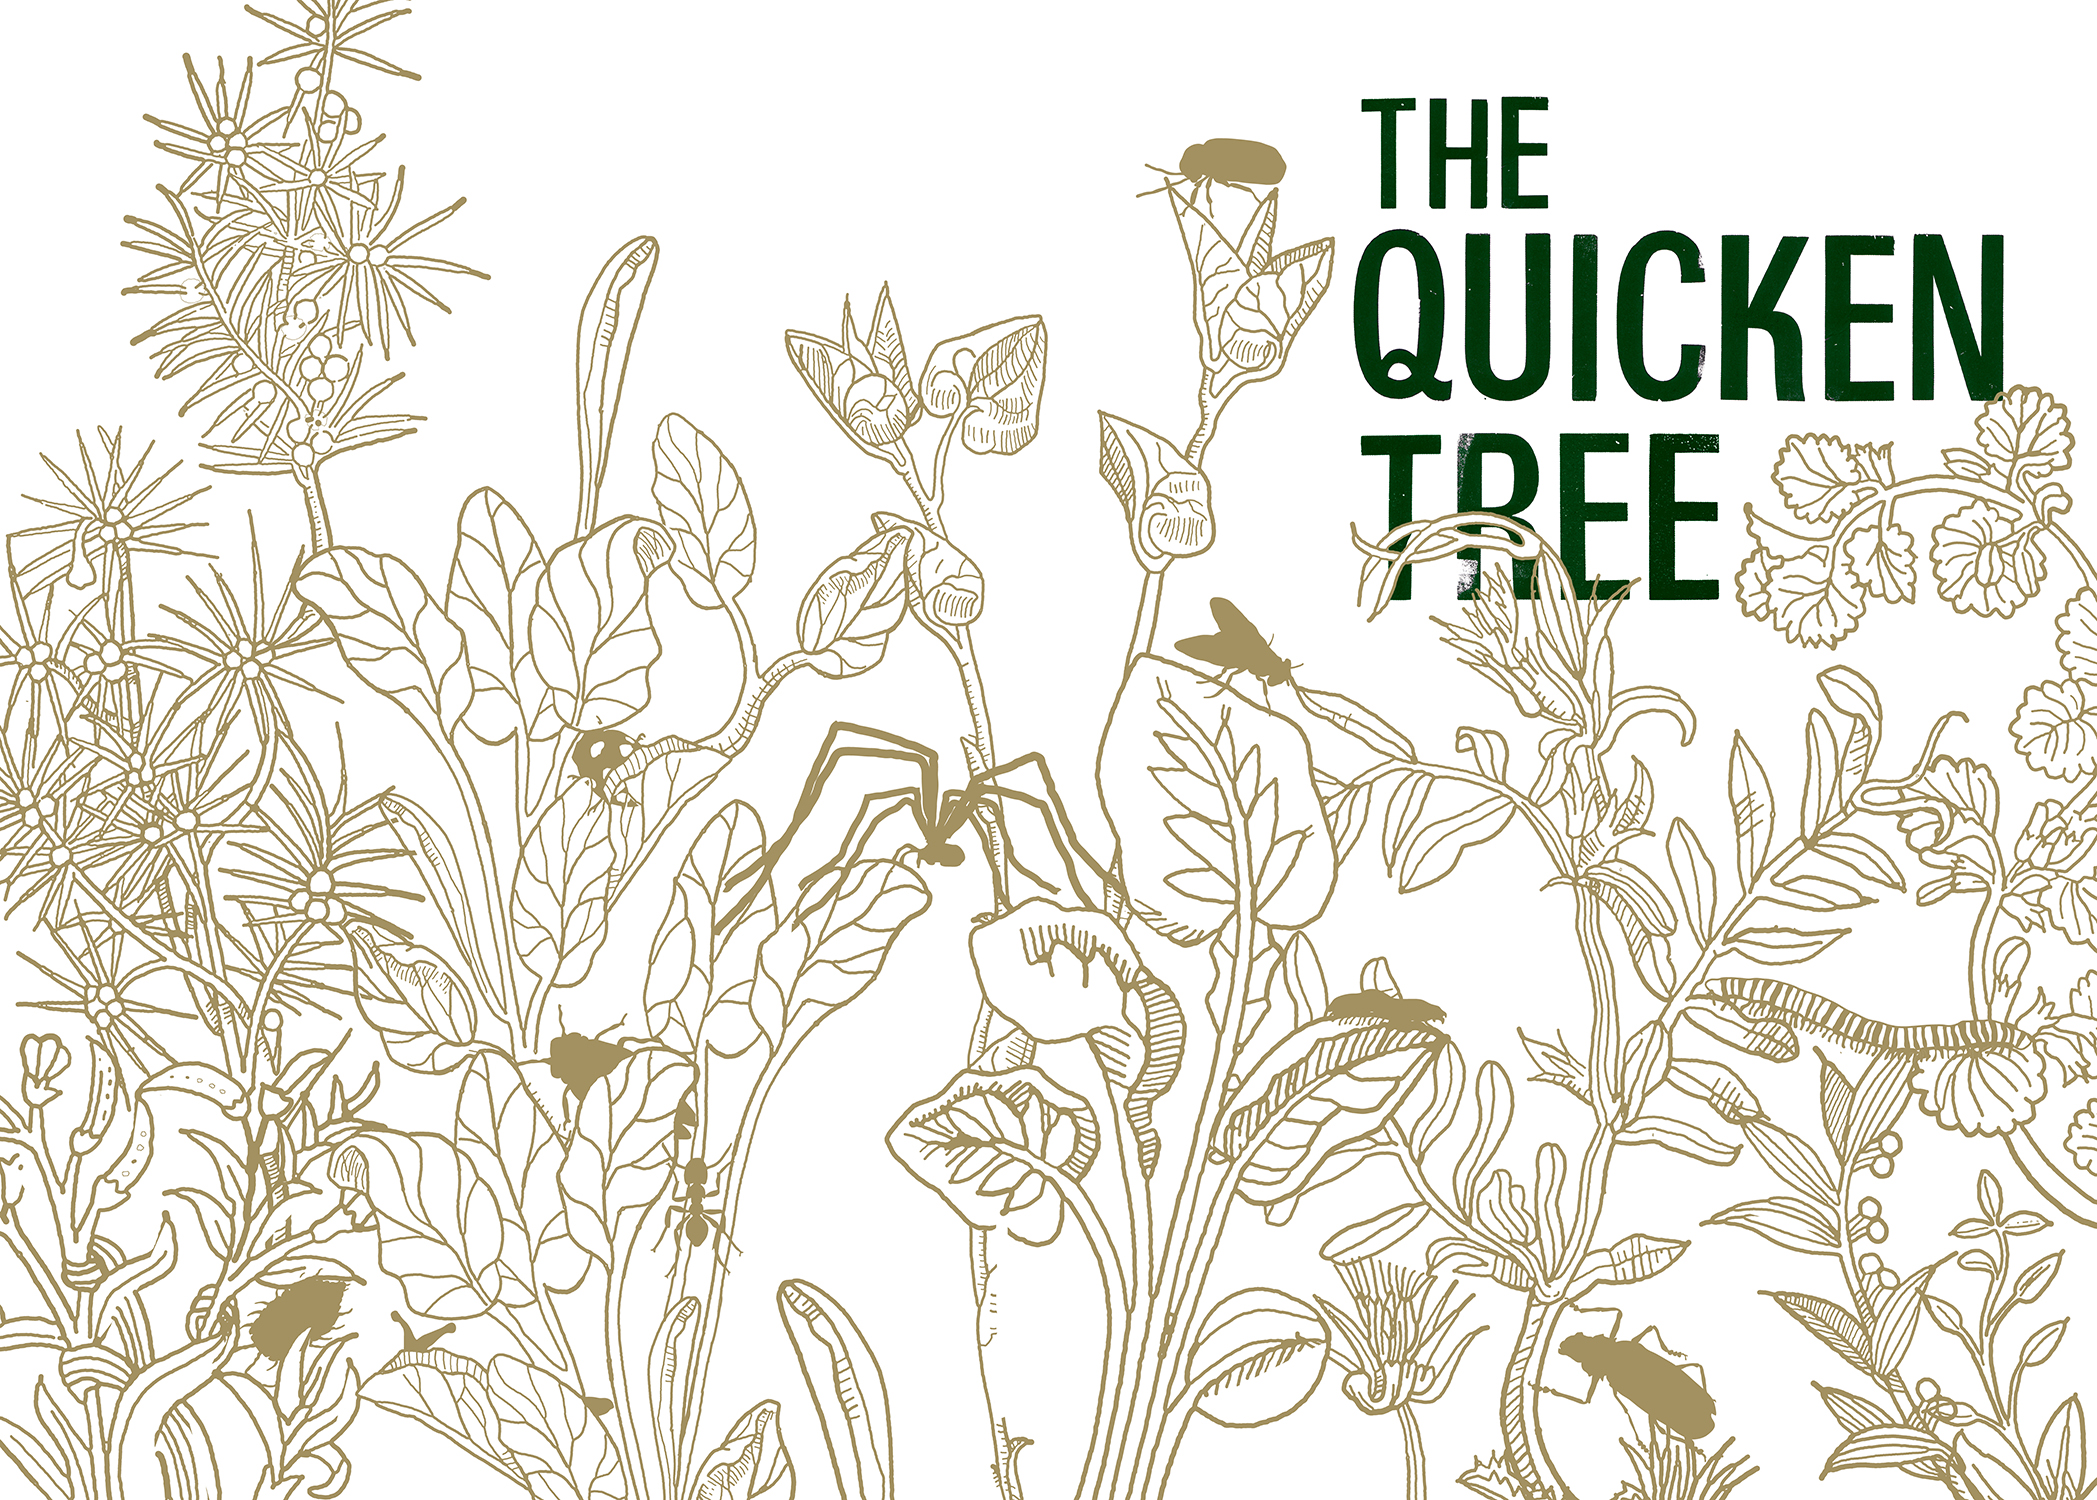 The Quicken Tree